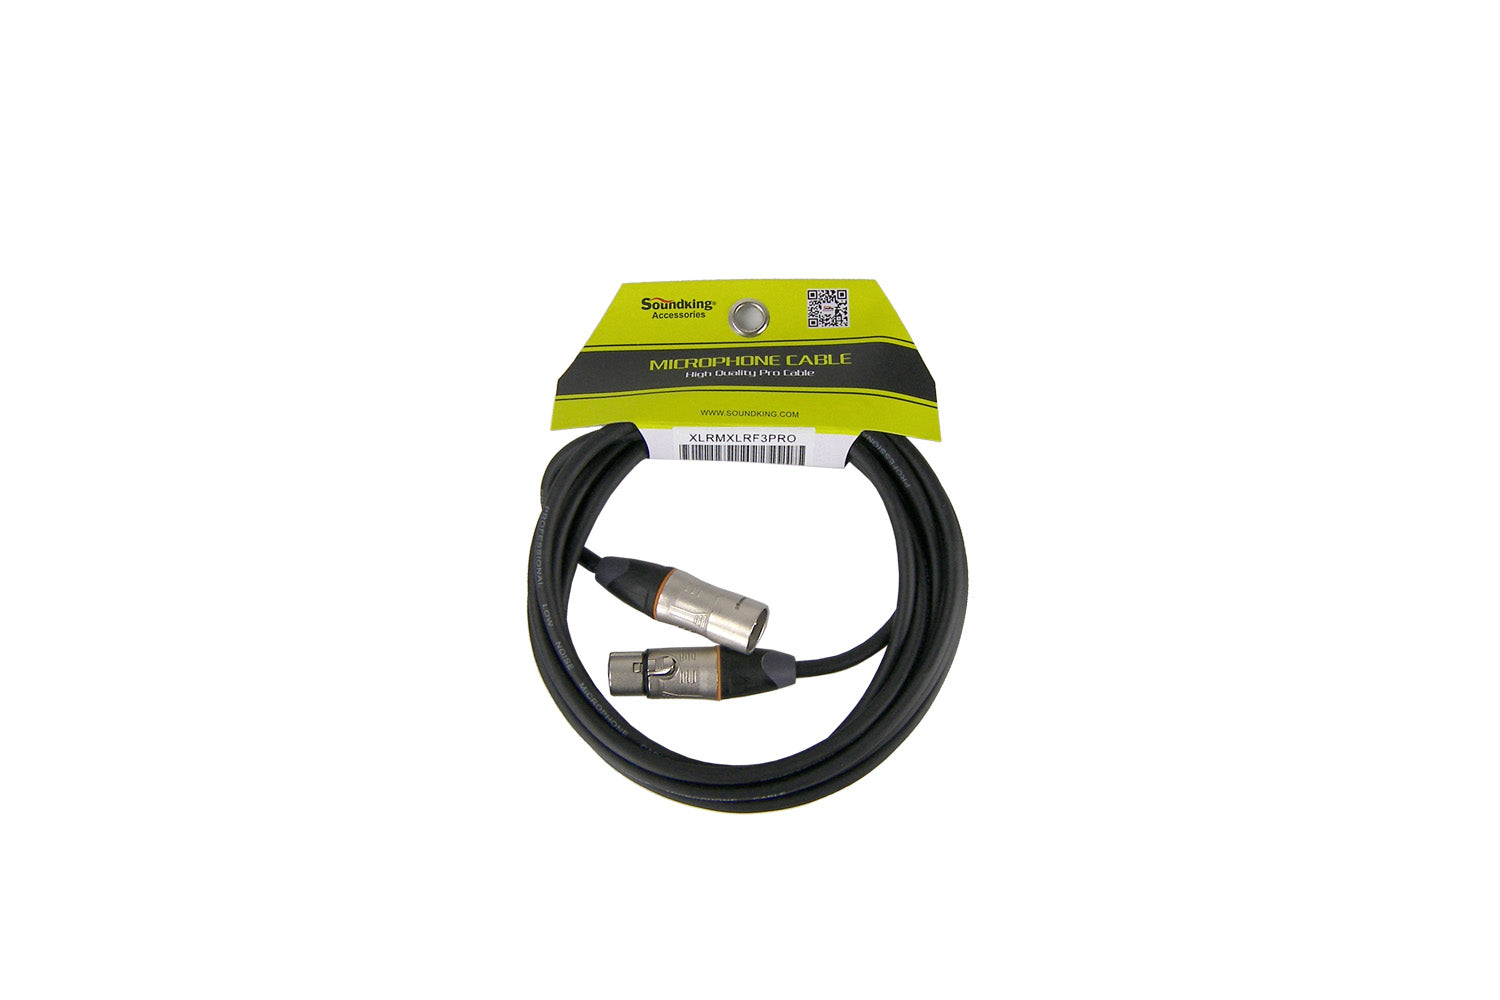 XLRMXLRF3PRO - 3m XLR 3 pin male to female professional grade cable